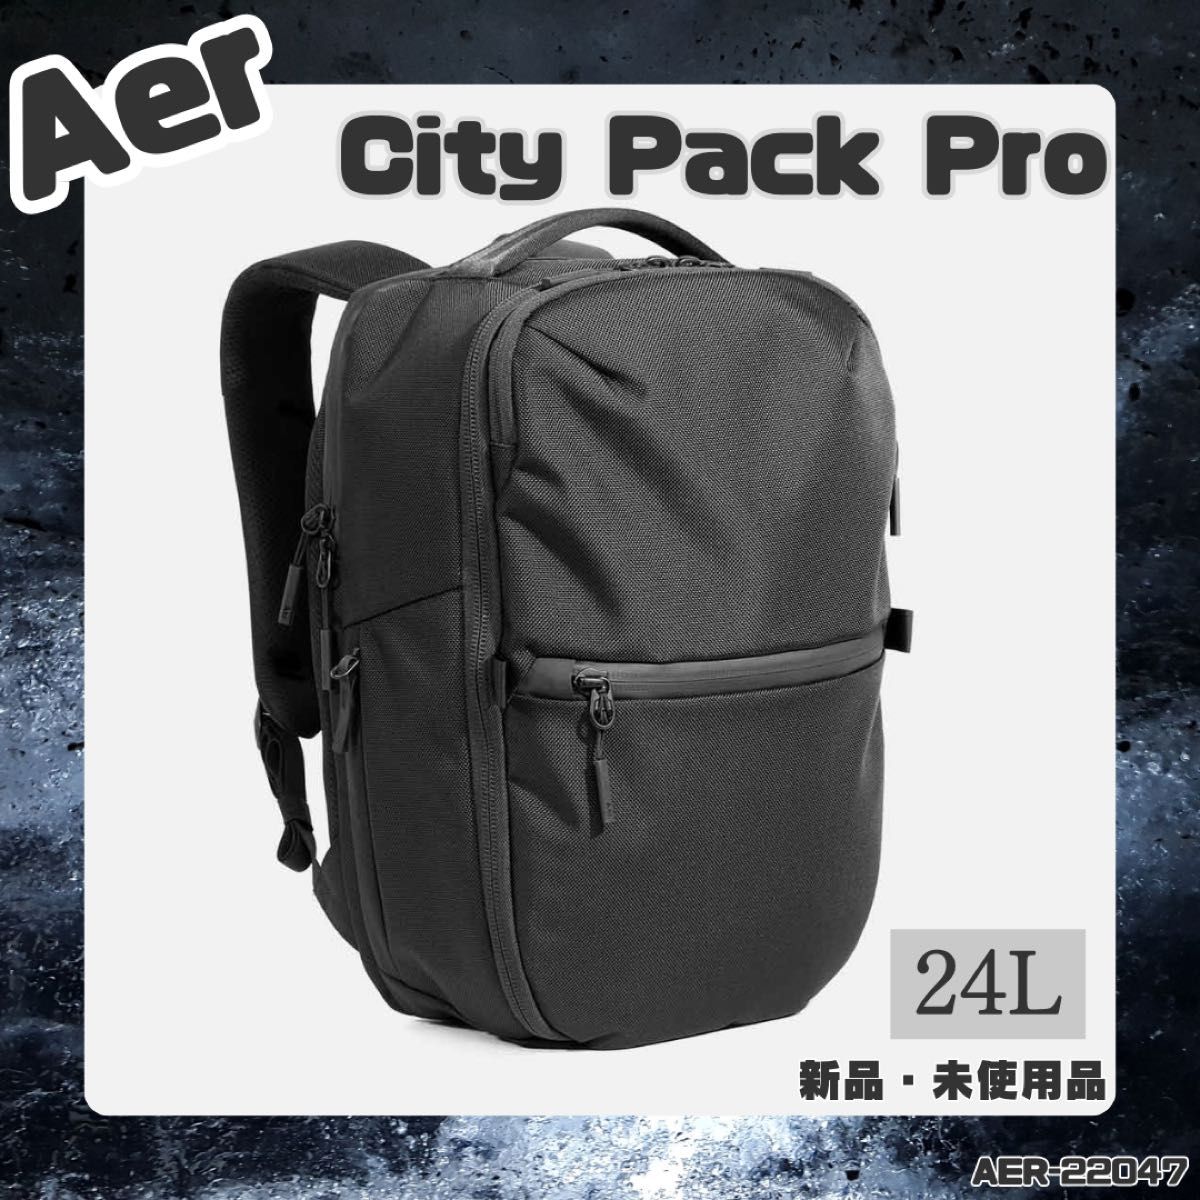 【Aer】 City Pack Pro Black エアー シティパック プロ